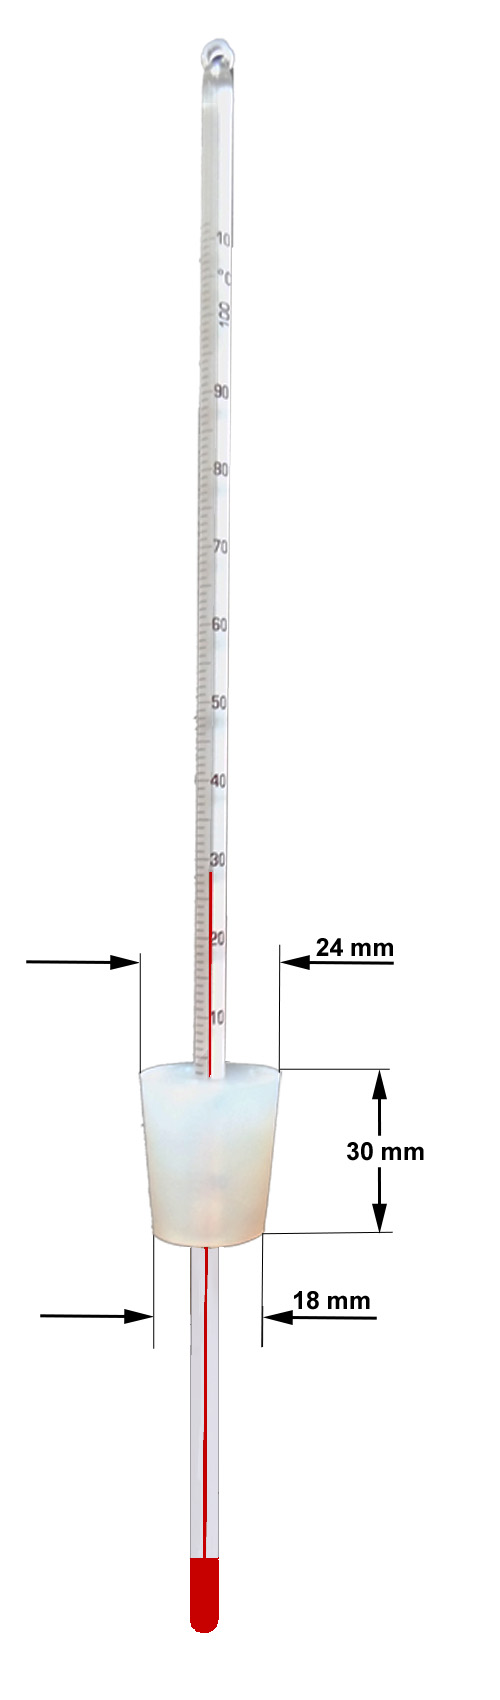 Destillier-Thermometer, 30 cm, mit Silikonstopfen Ø 18-24 mm (NS24))